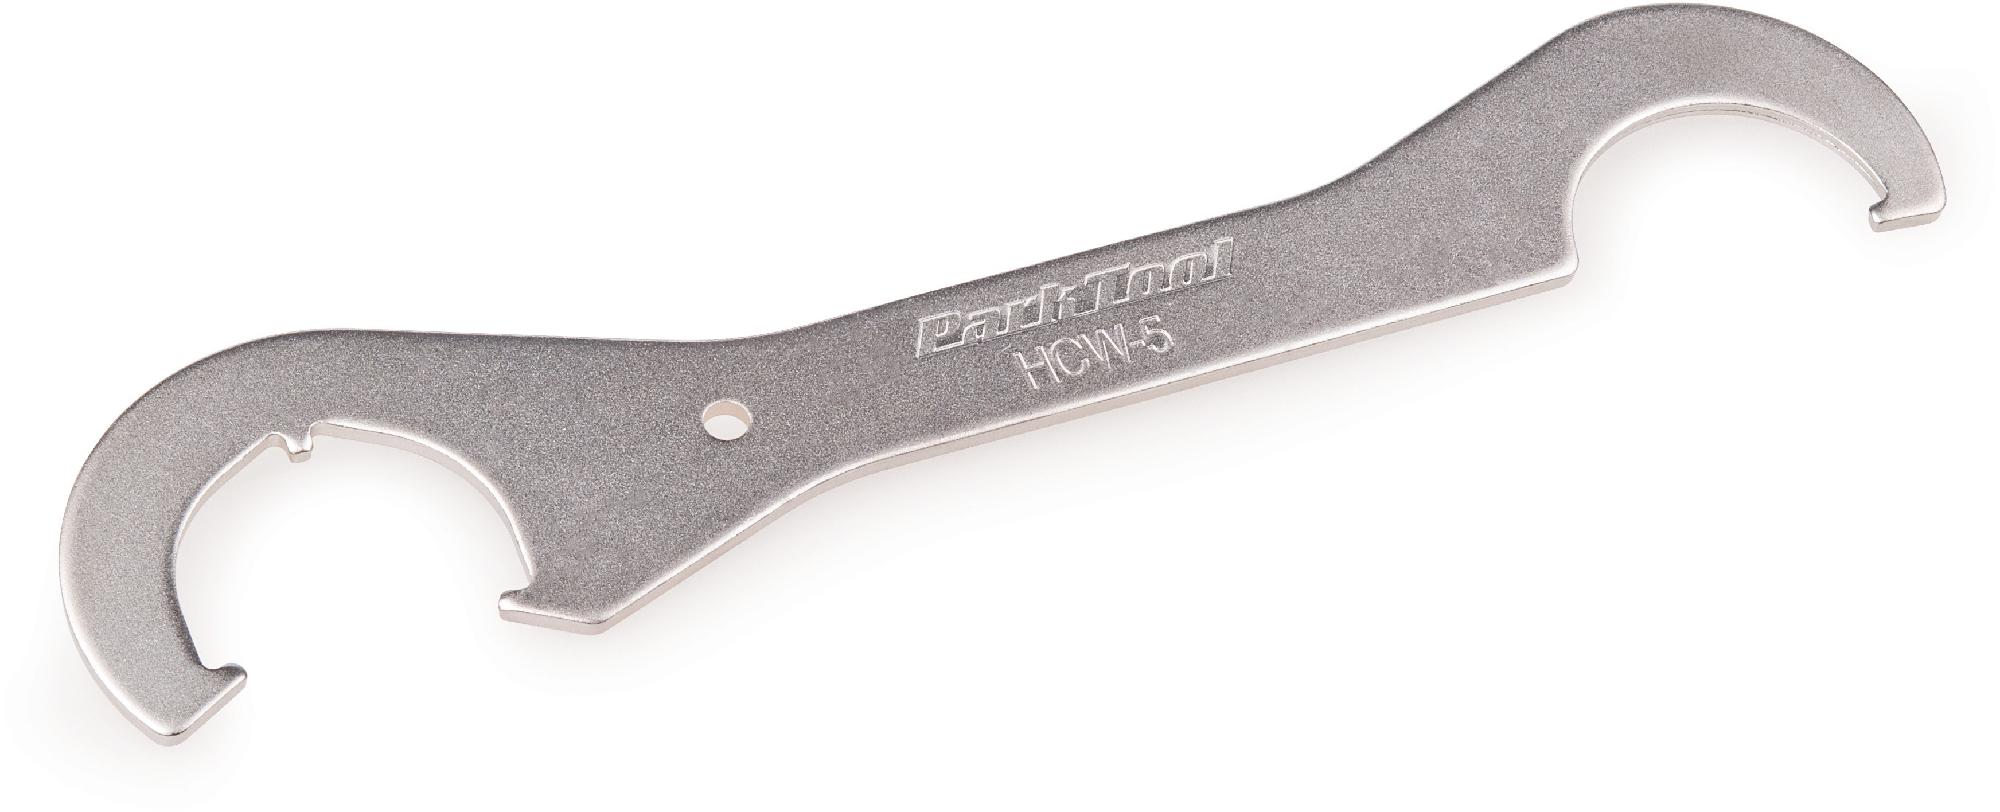 HCW-5 Крючок нижнего кронштейна Гаечный ключ Park Tool инструмент для переборки цепей mini chain ct 5 park tool цвет one color